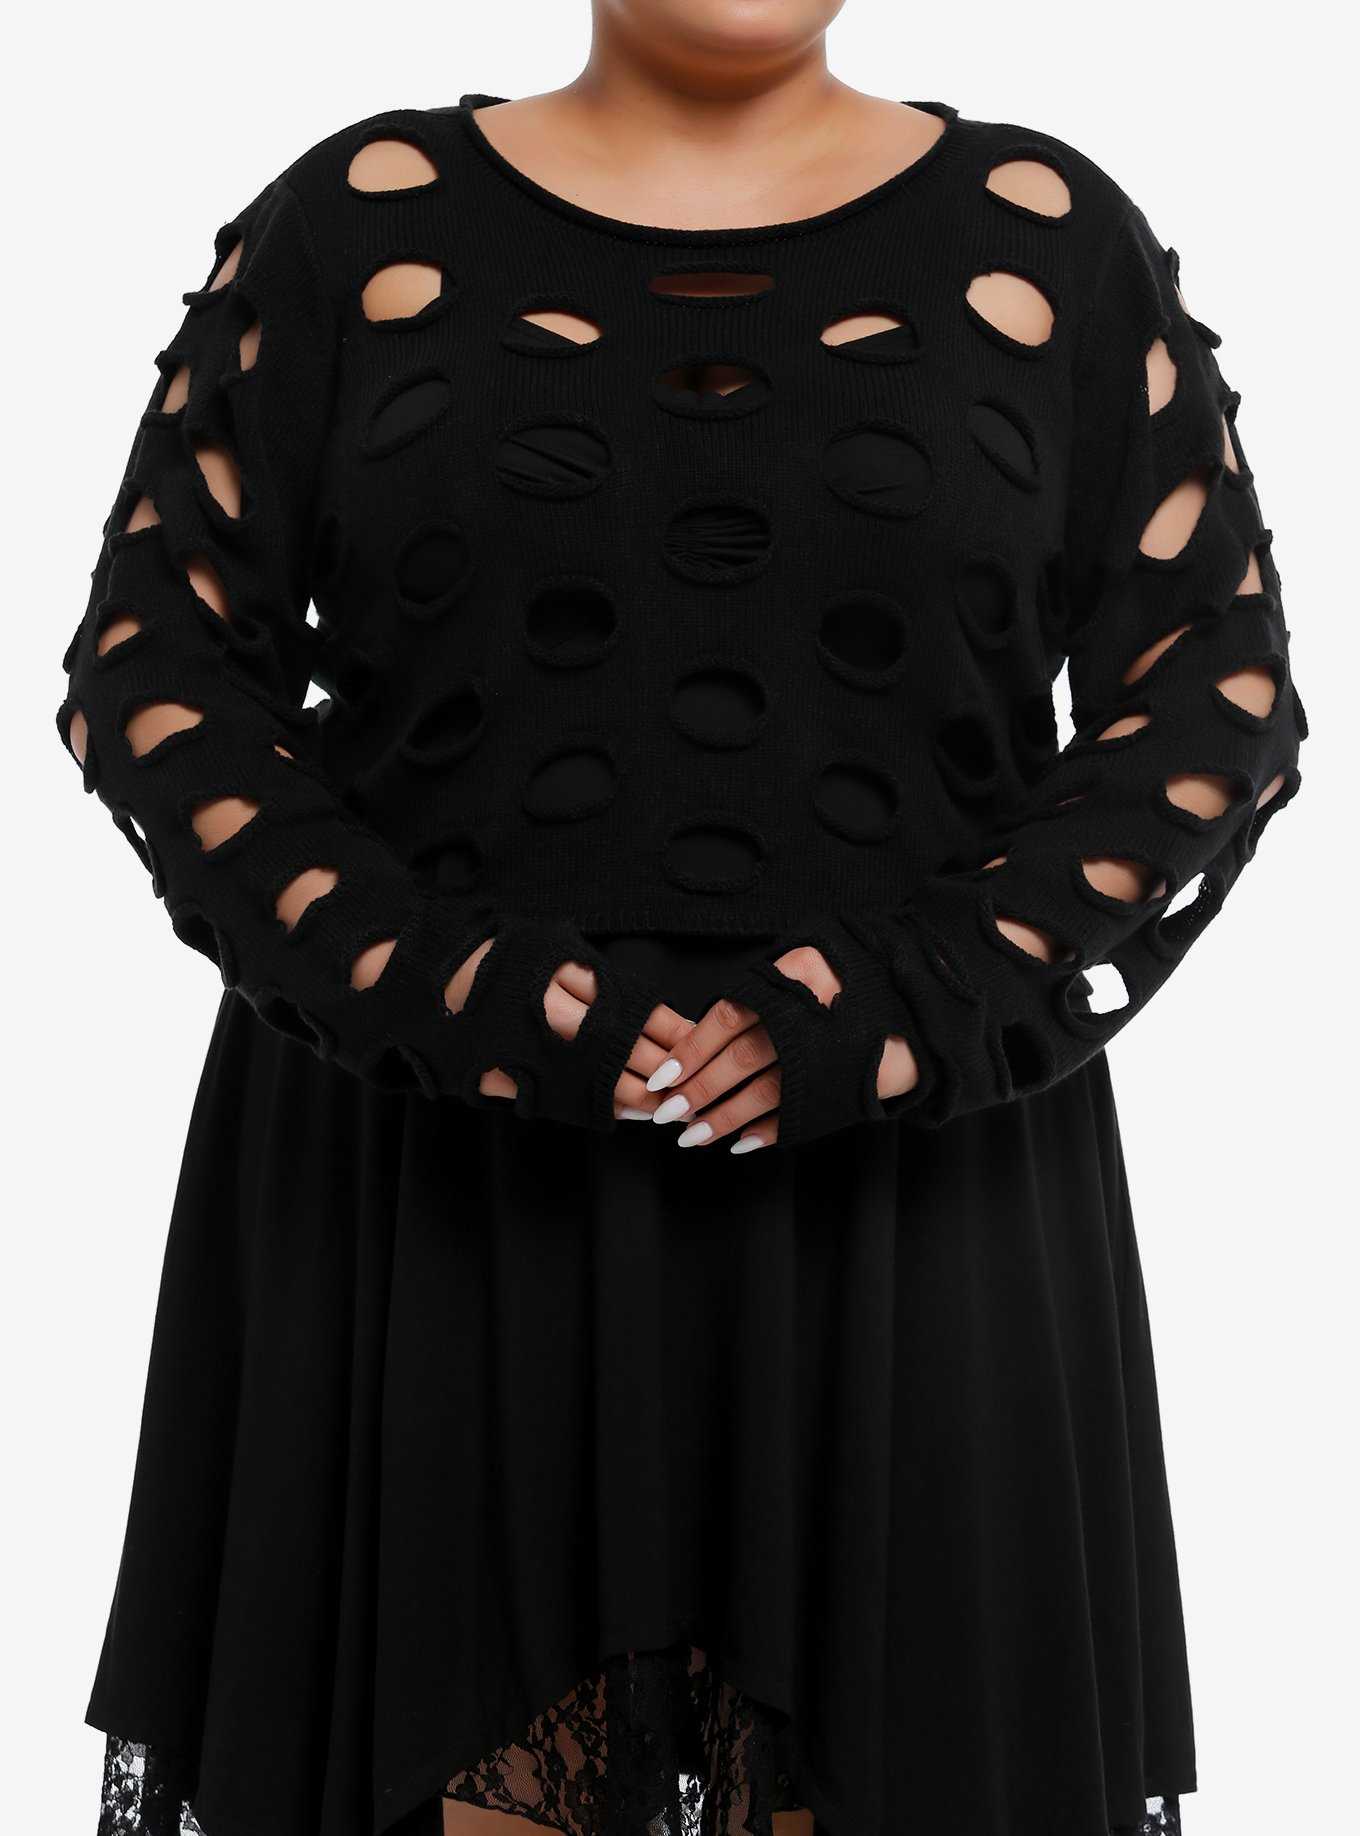 Cosmic Aura Black Cutout Girls Crop Sweater Plus Size, , hi-res